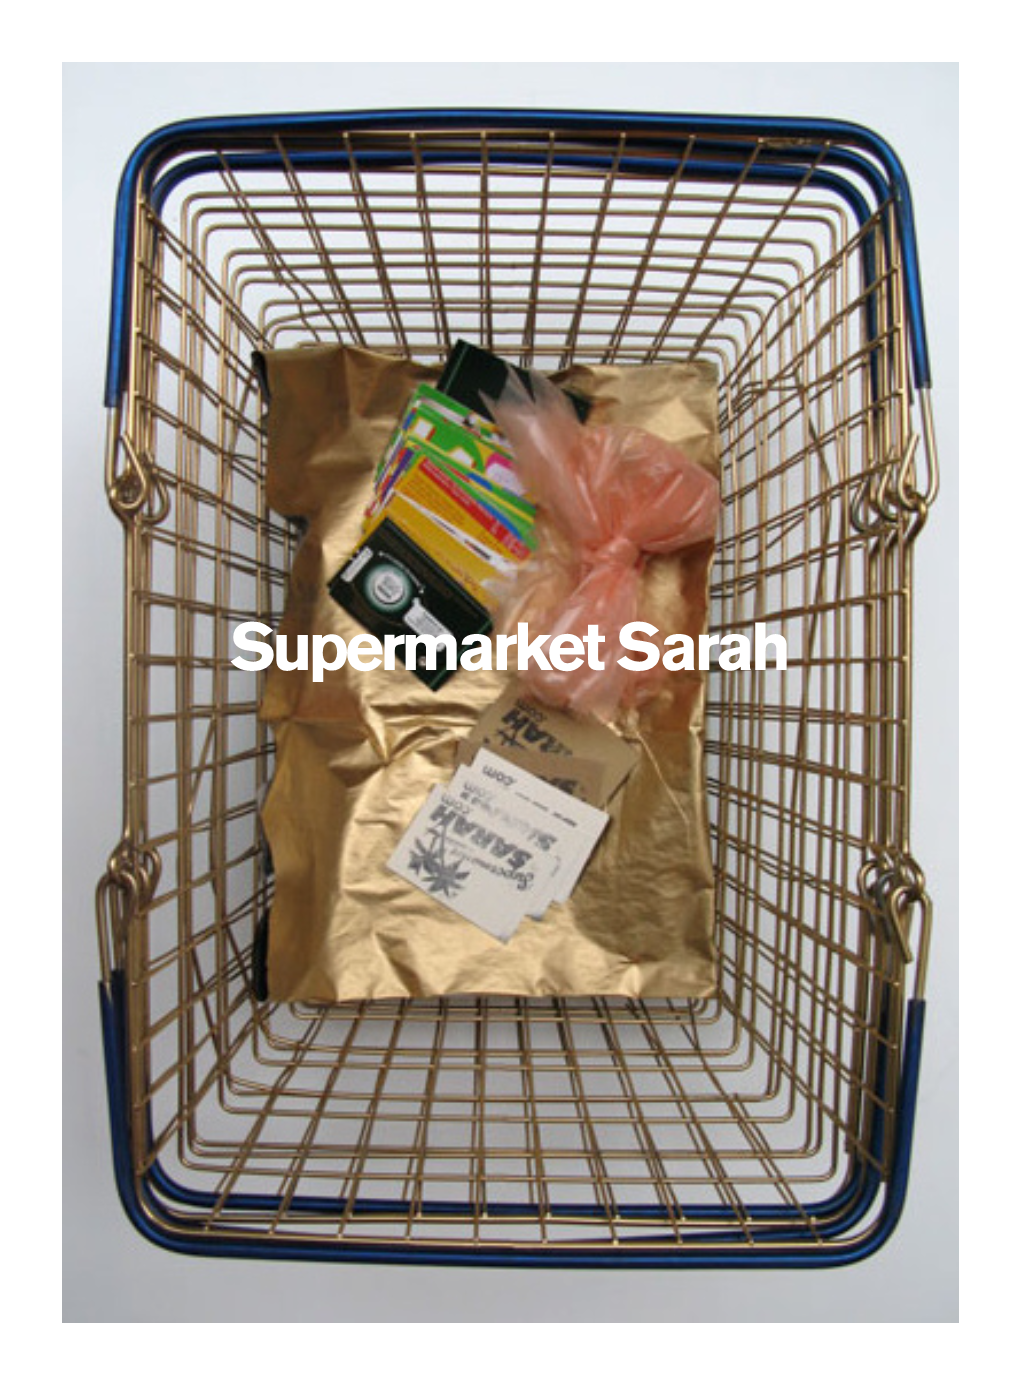 Supermarket Sarah Concept